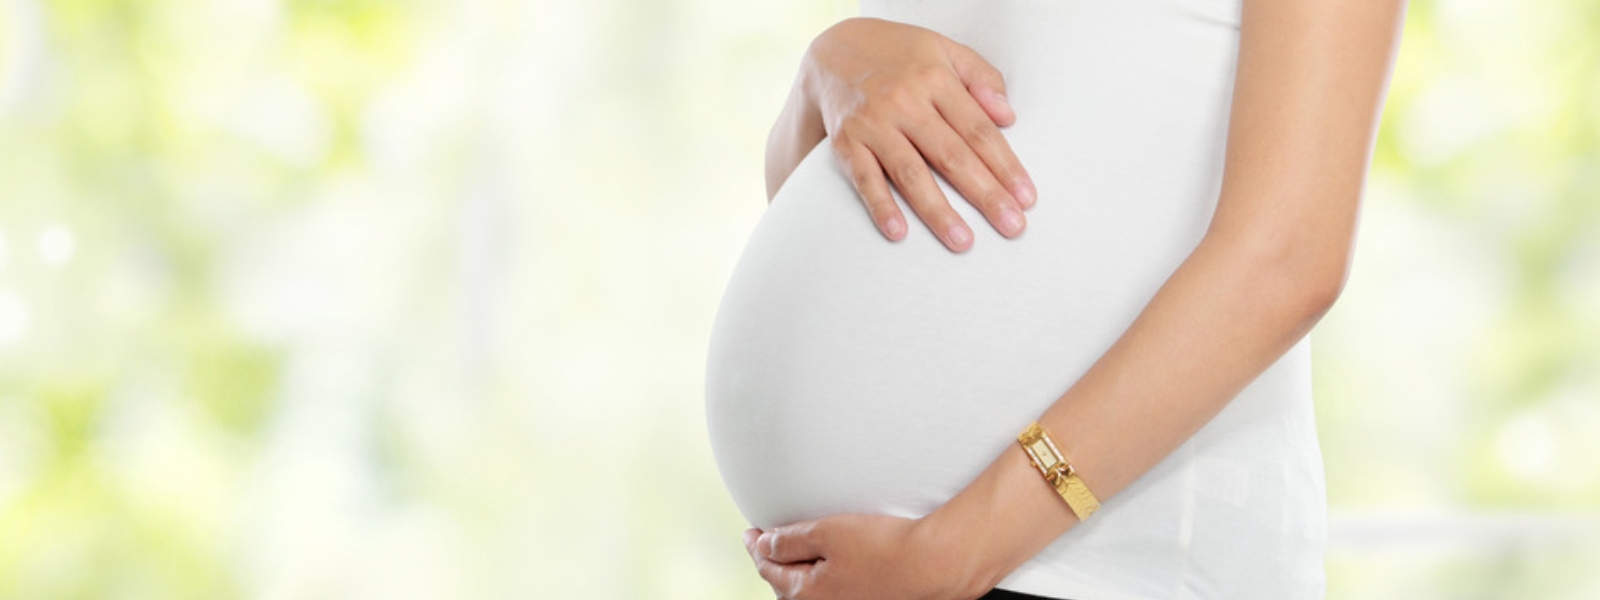 2,250 Pregnant women had tested COVID positive in Sri Lanka so far – Family Health Bureau